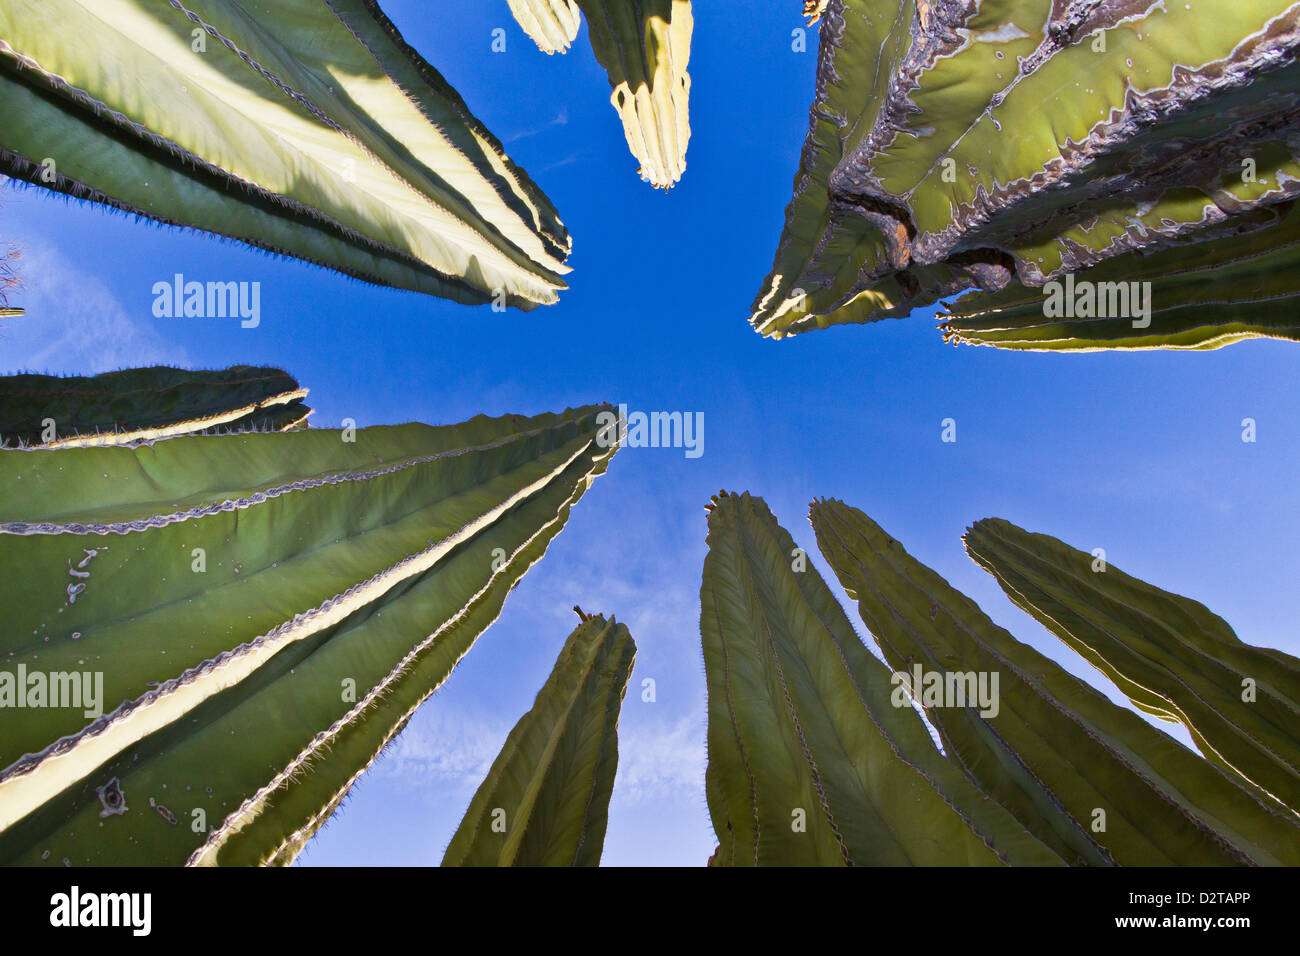 Cardon cactus (Pachycereus pringlei), Isla Catalina, Gulf of California (Sea of Cortez), Baja California, Mexico, North America Stock Photo